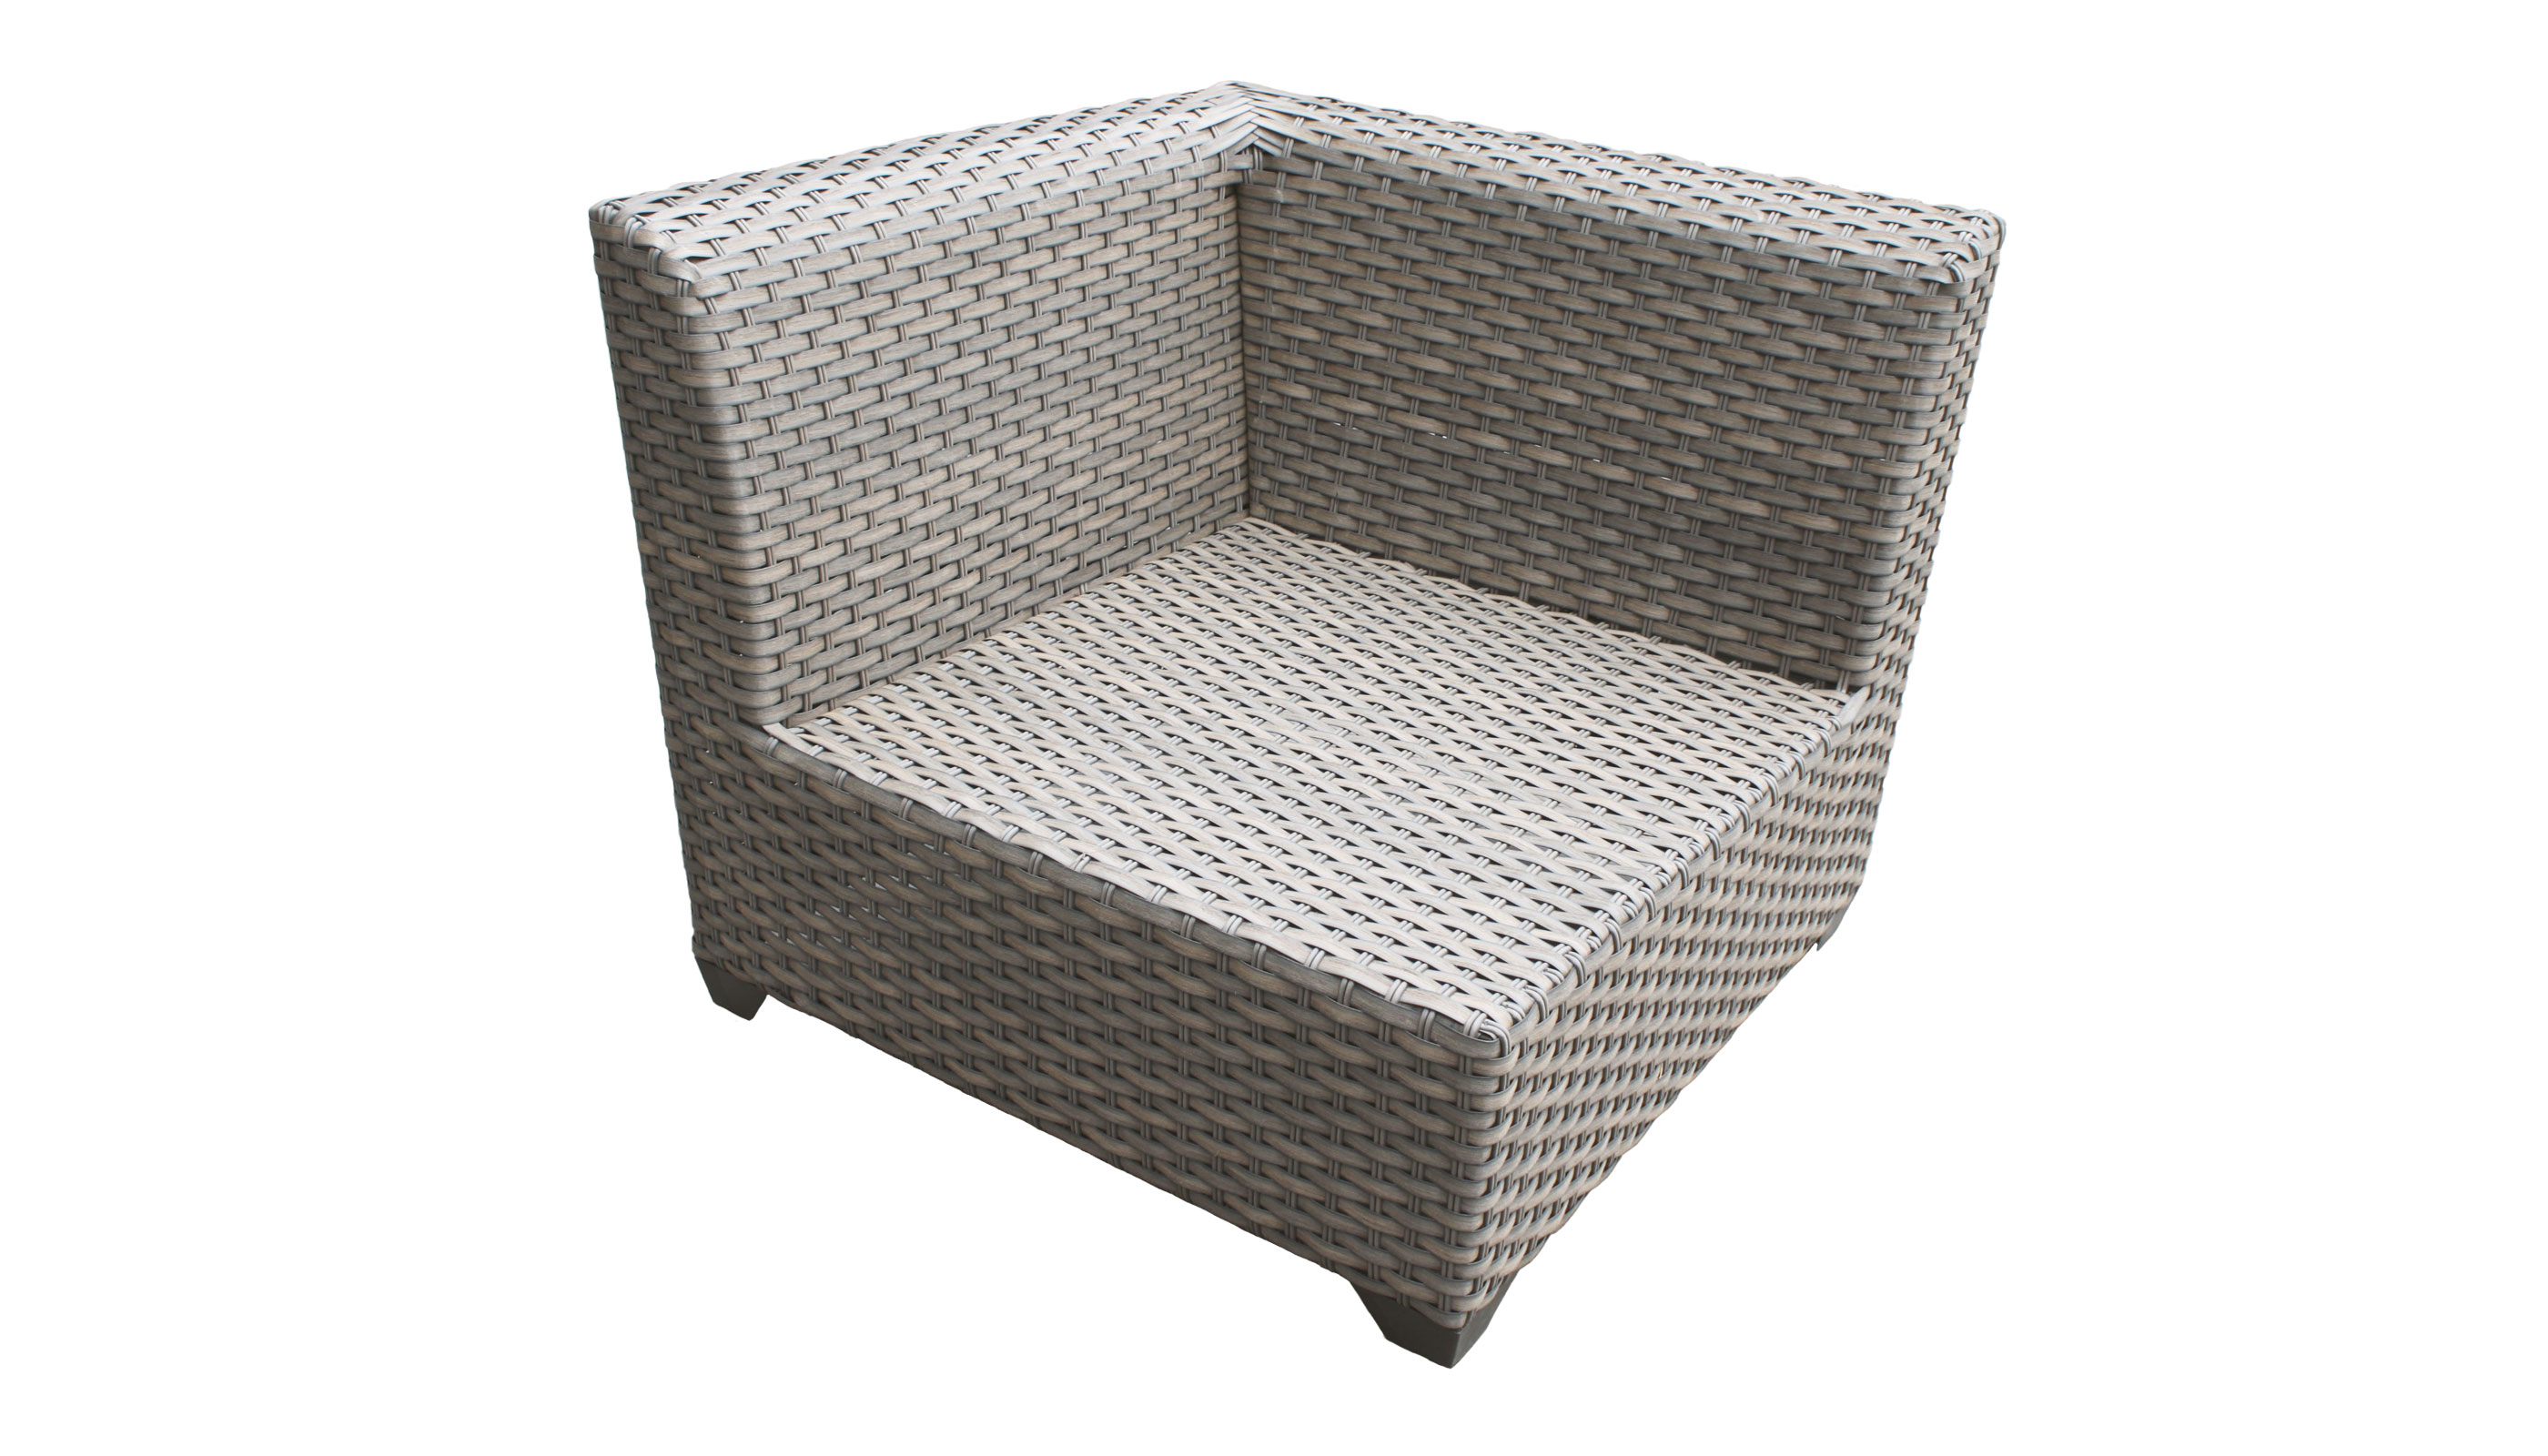 Florence 3 Piece Outdoor Wicker Patio Furniture Set 03b - TK Classics